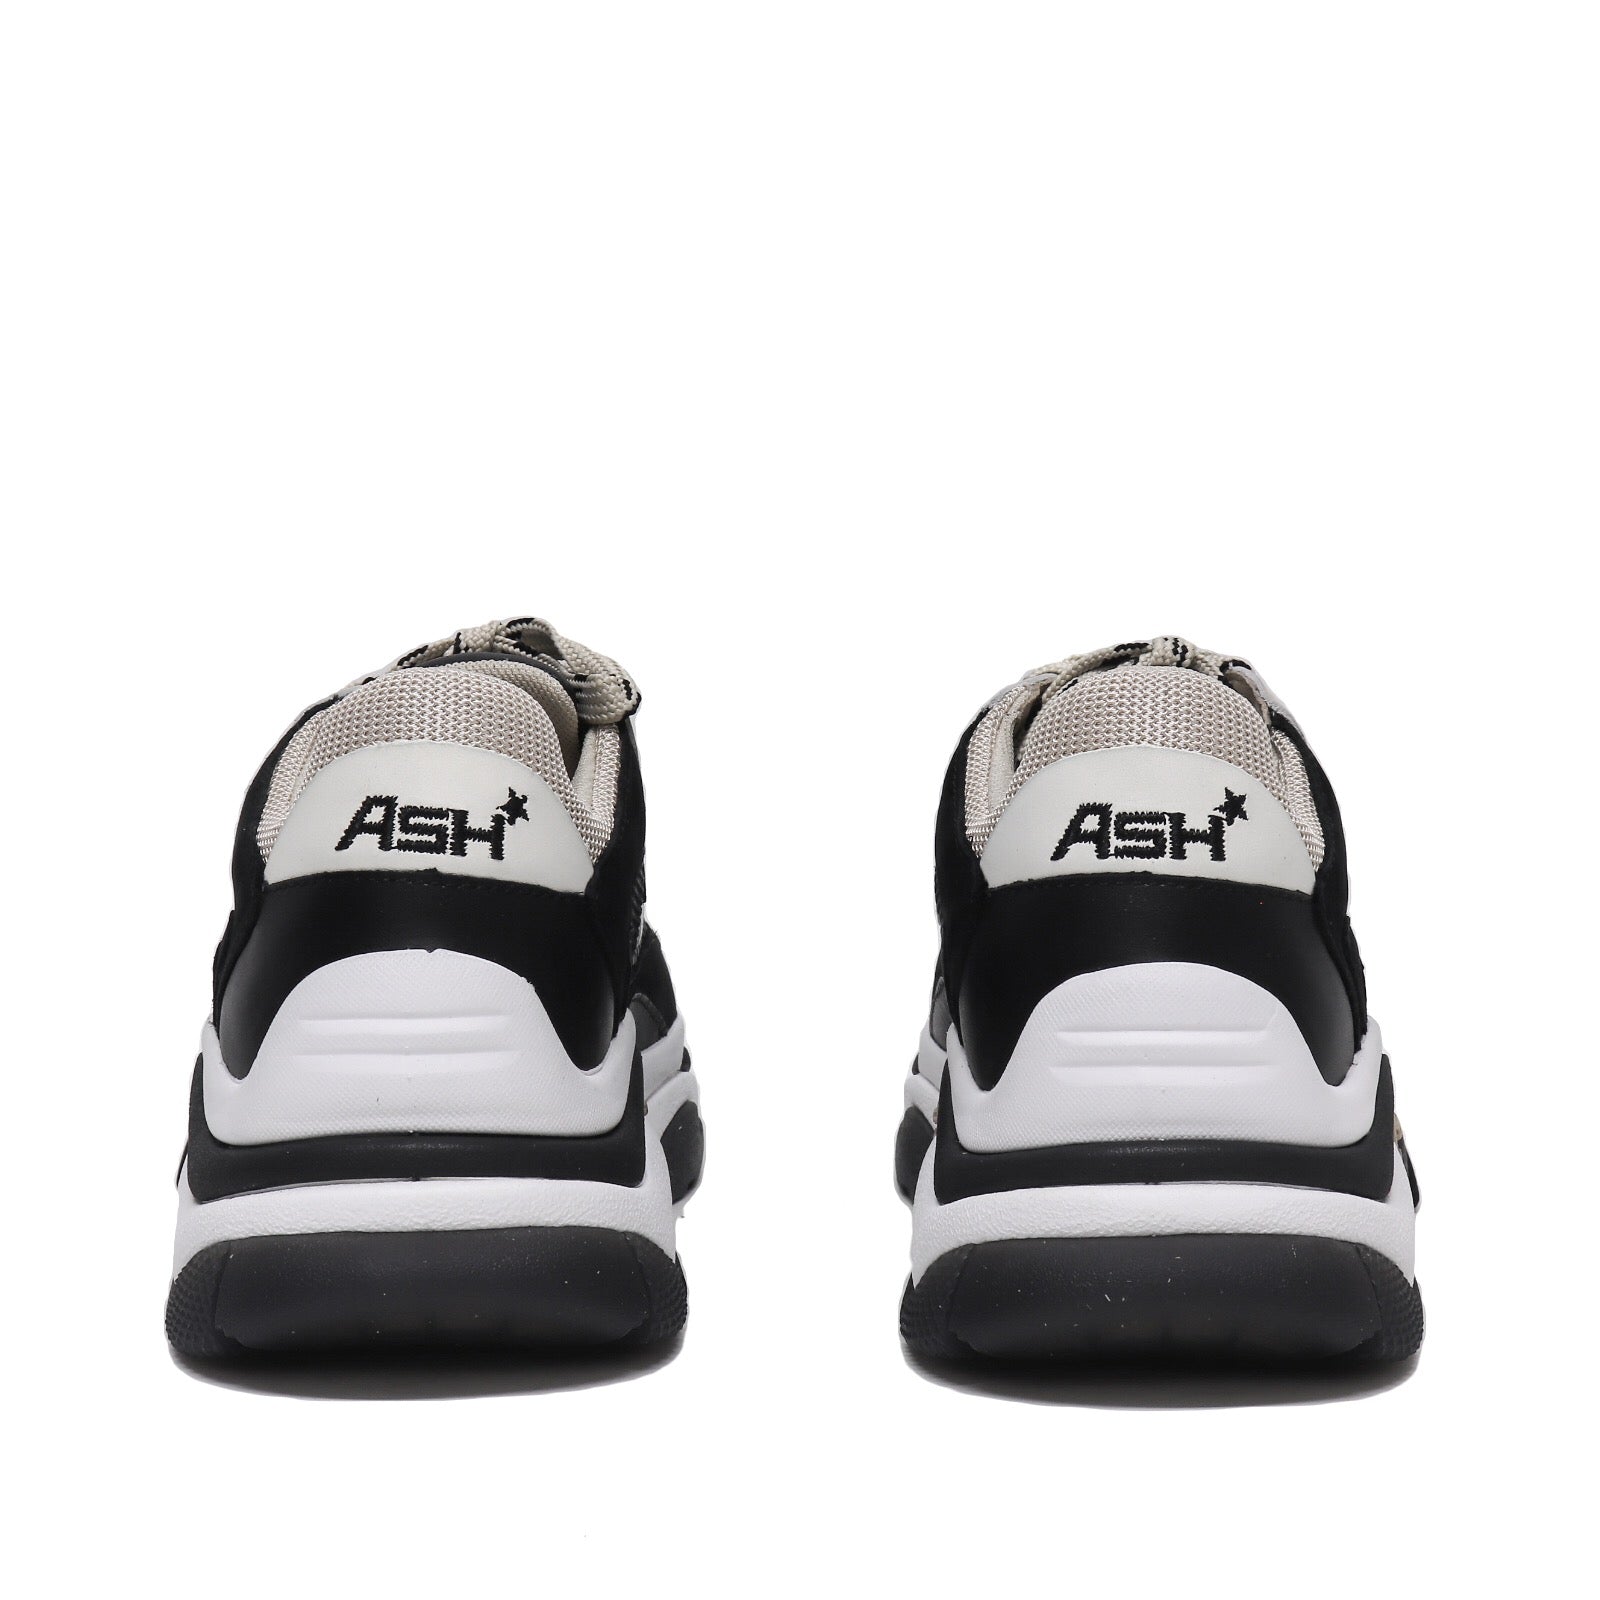 Ash Sneaker Addict03